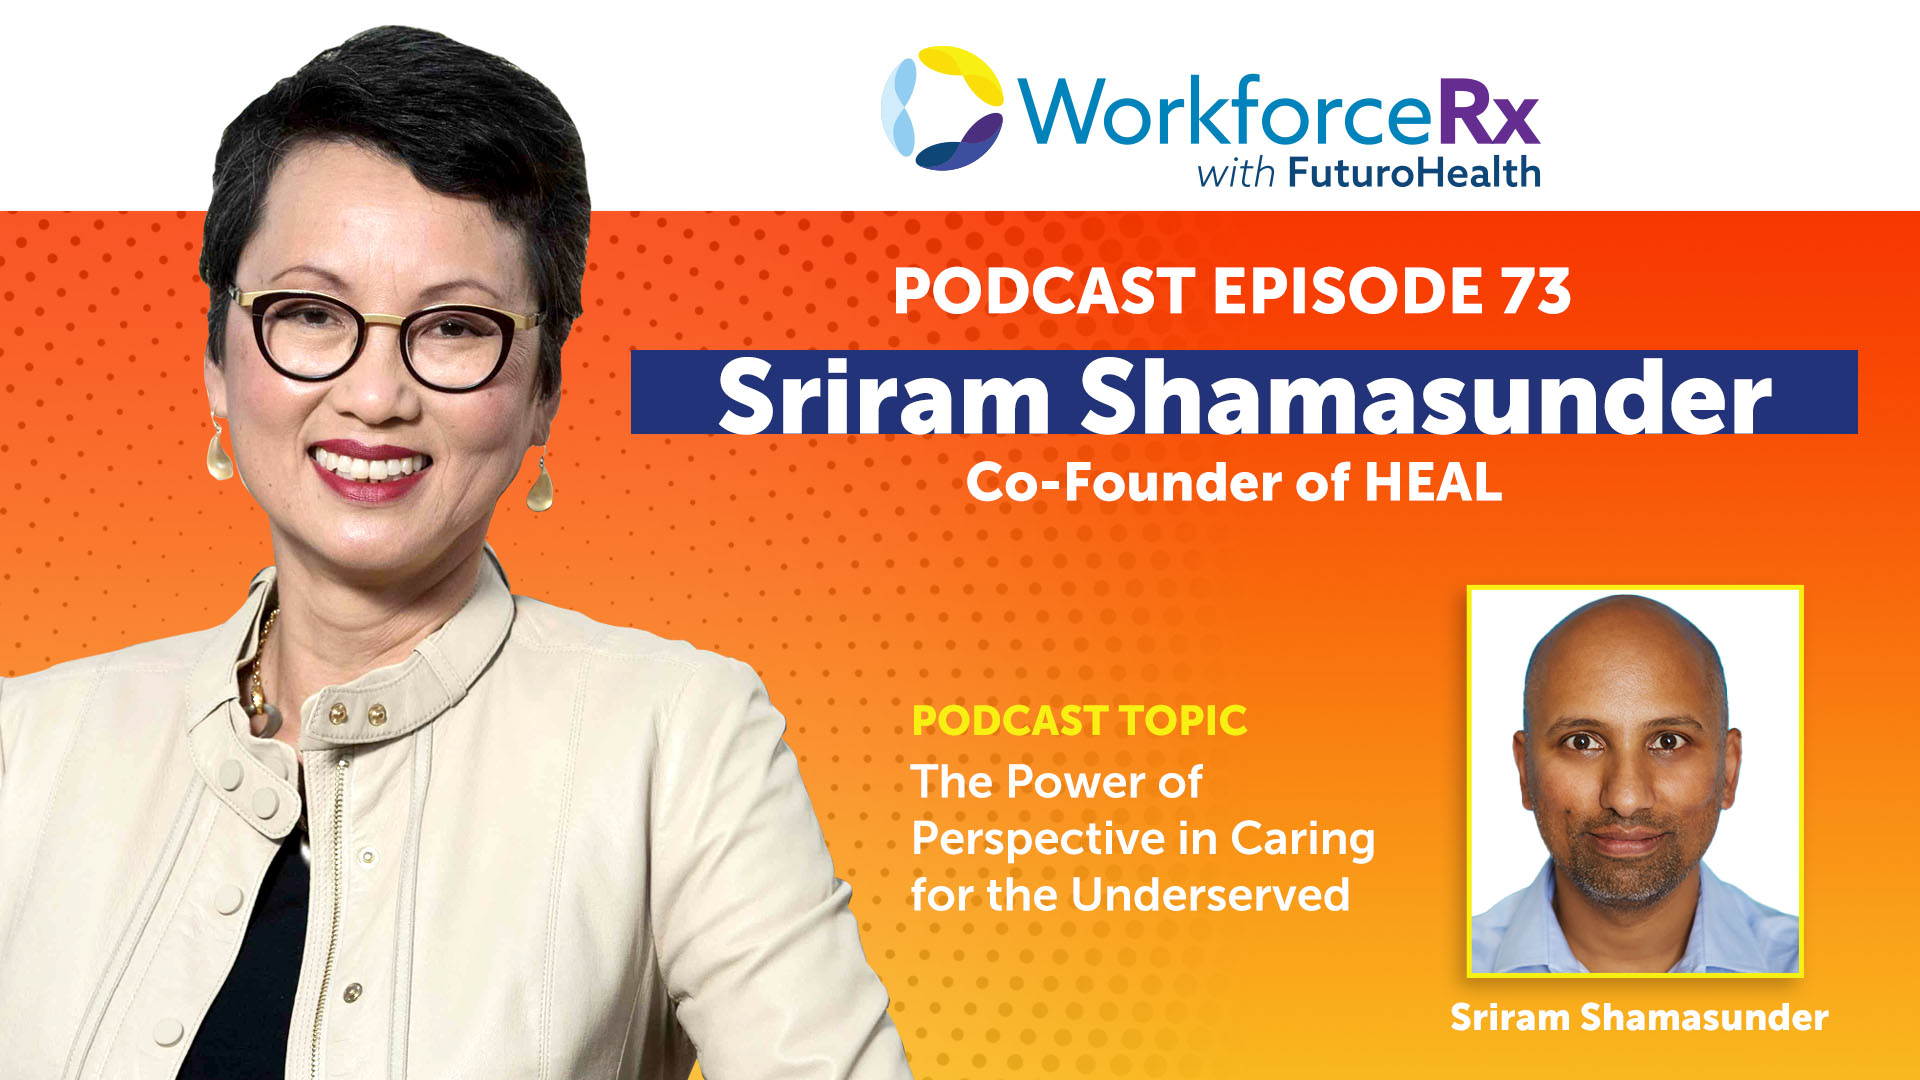 EP73 WorkforceRx Podcast Sriram Shamasunder